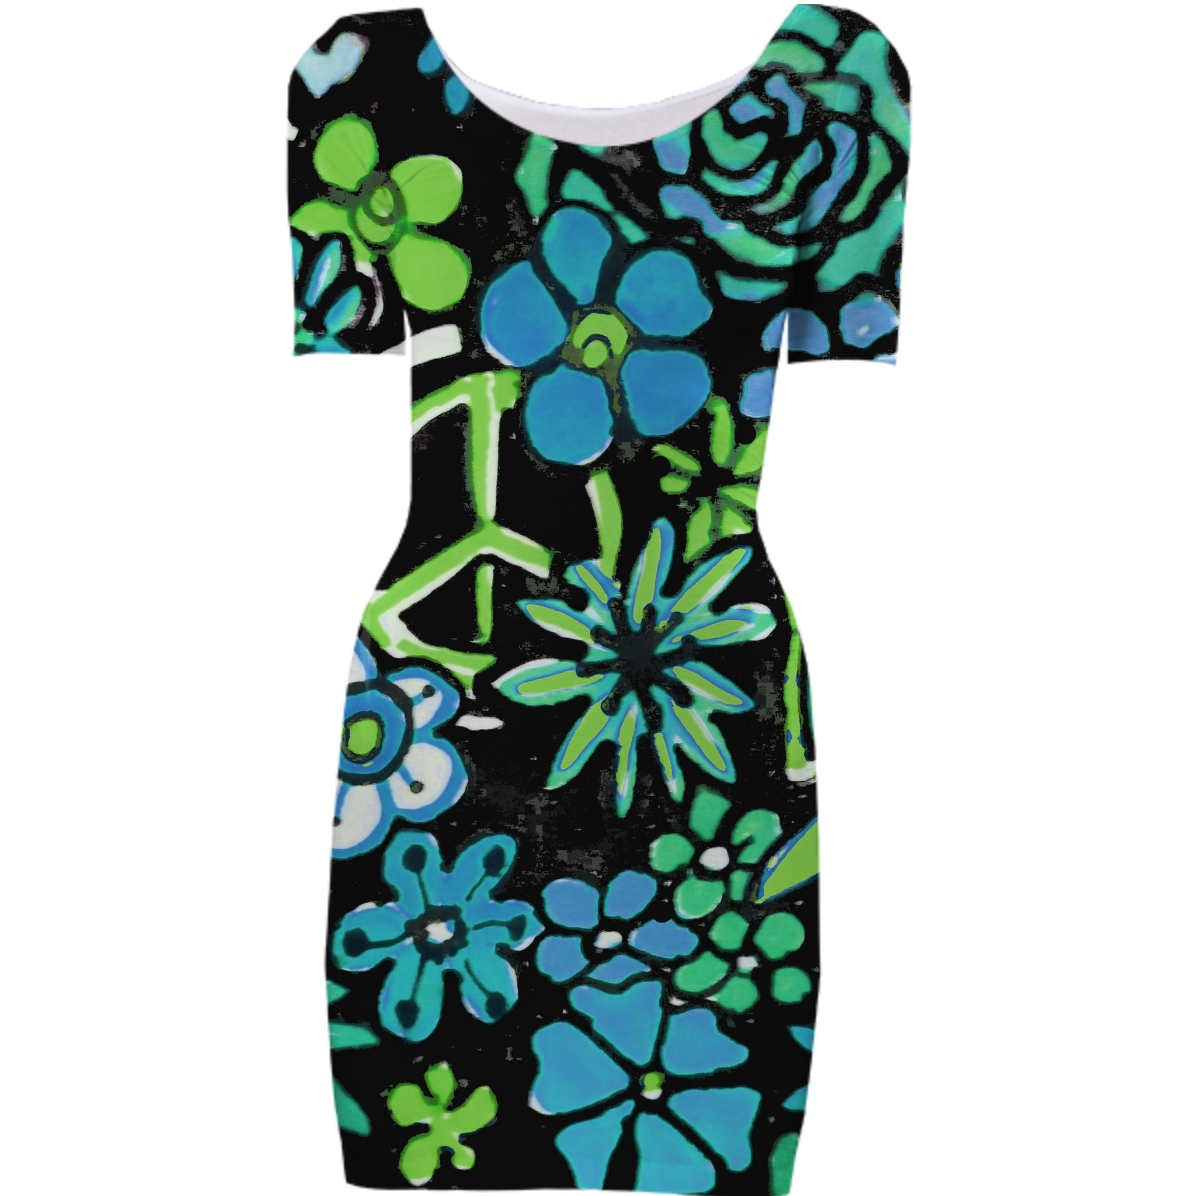 Shop Peace and Love Flower Power Bodycon Dress by RokinRonda Design ...